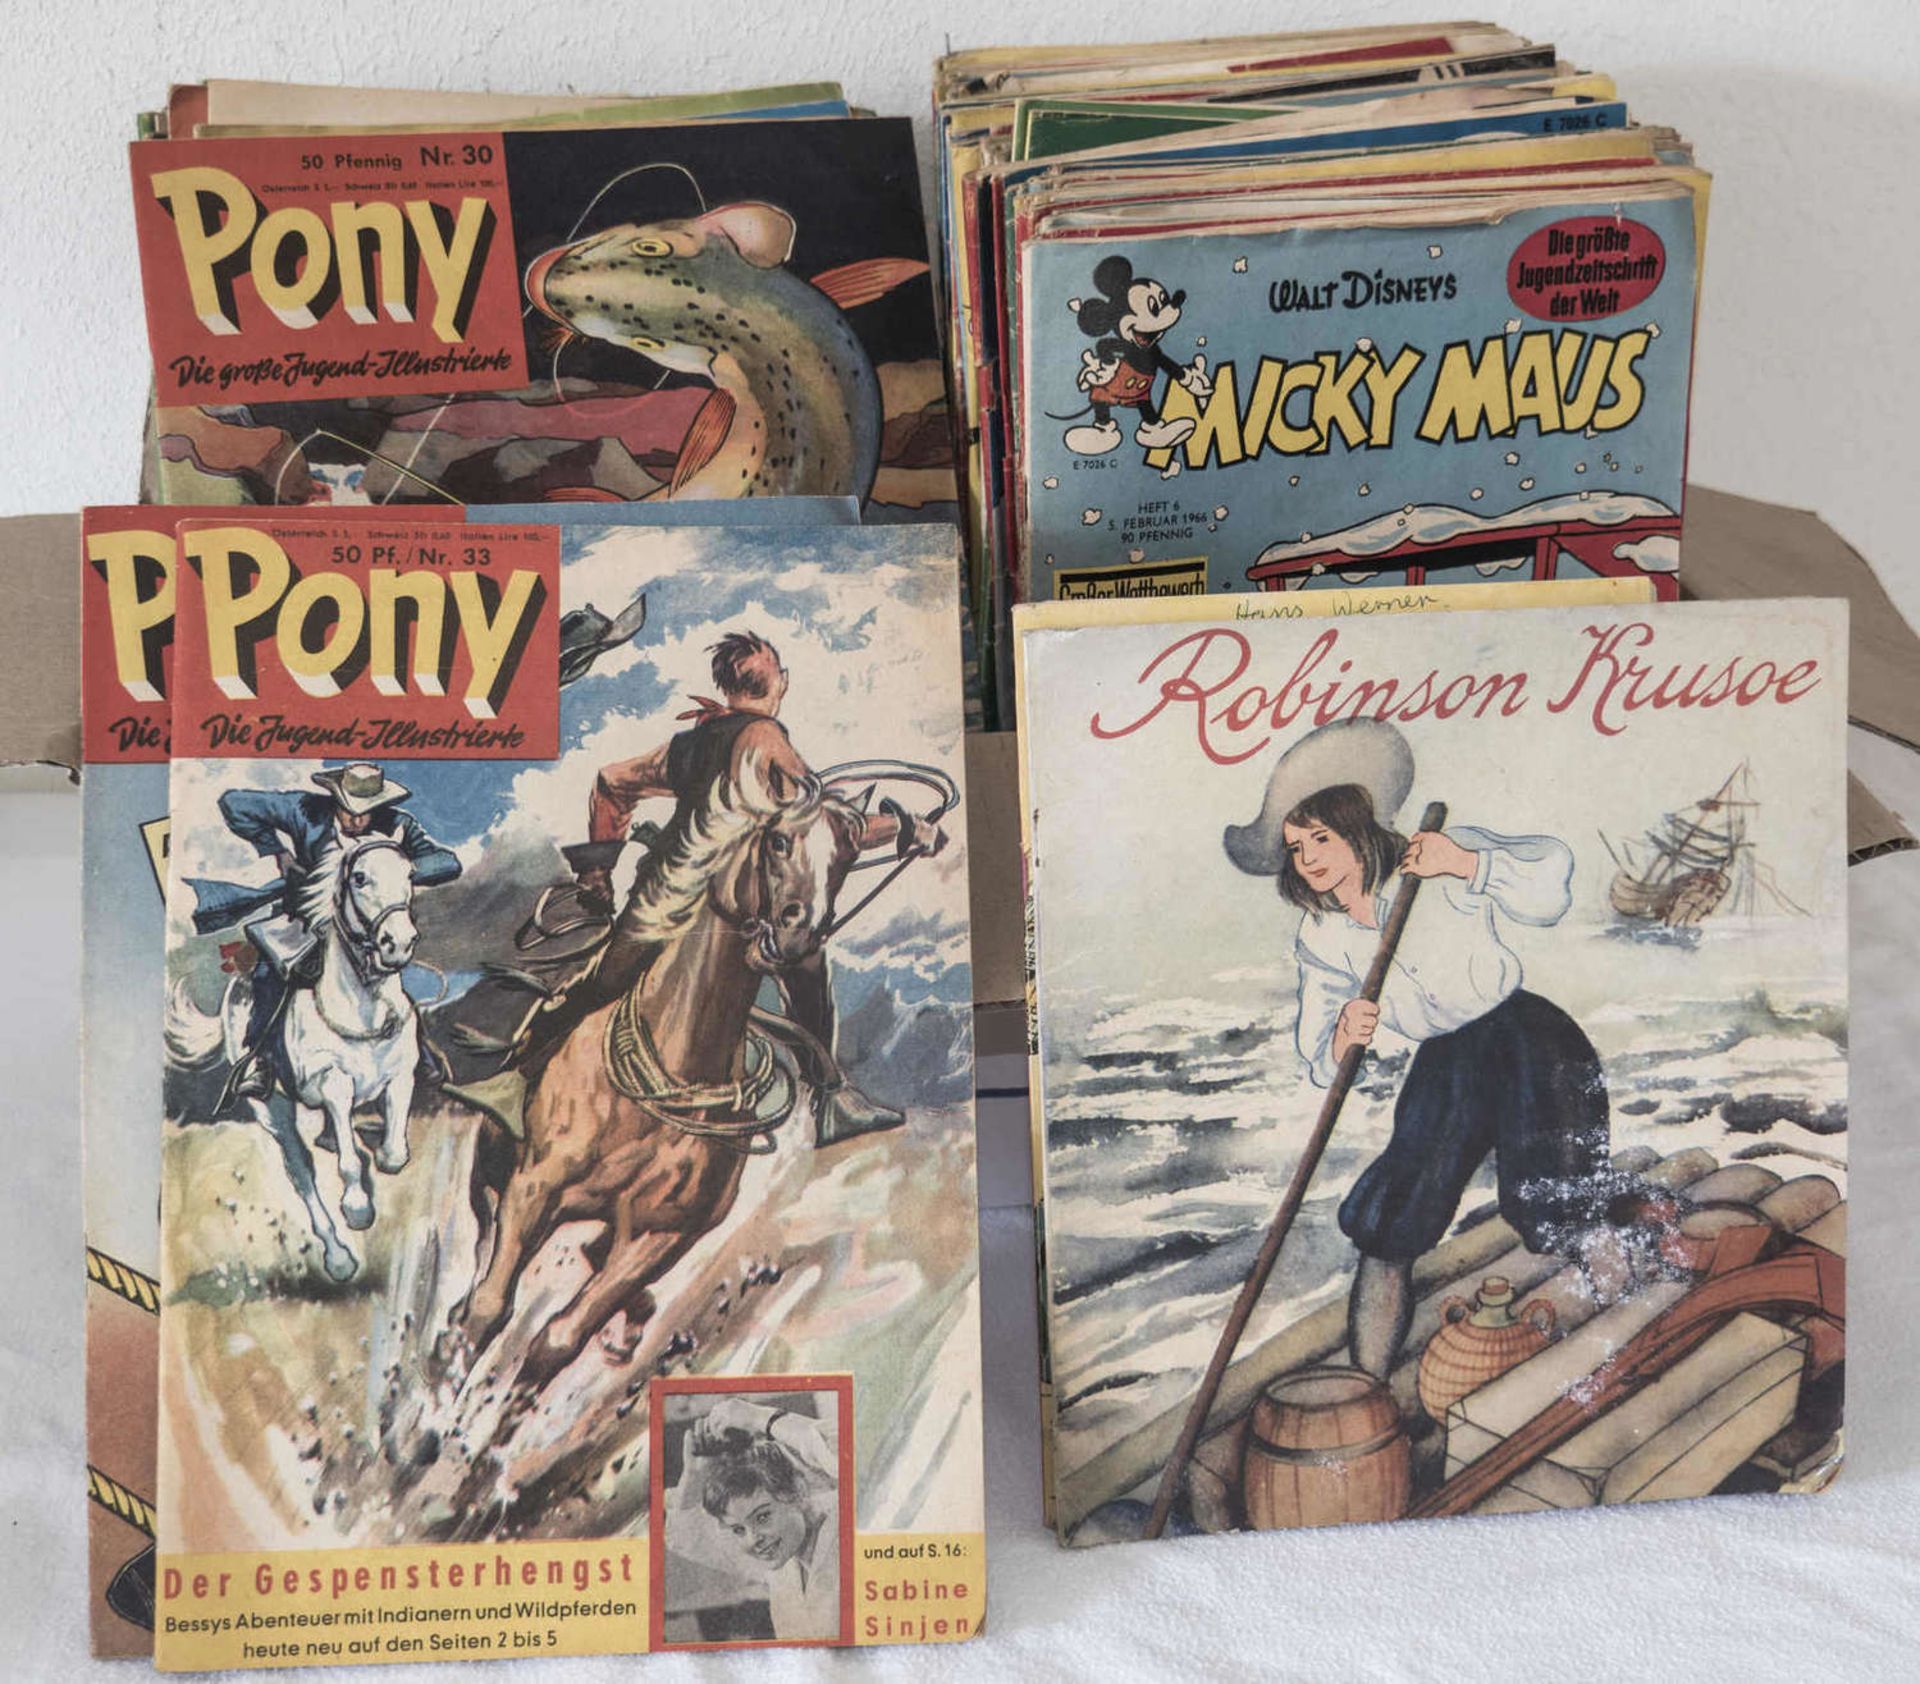 Konvolut alte Comic - Hefte, überwiegend Micky Maus. Dabei auch Felix, Fix und Foxi, Bessy, Tarzan